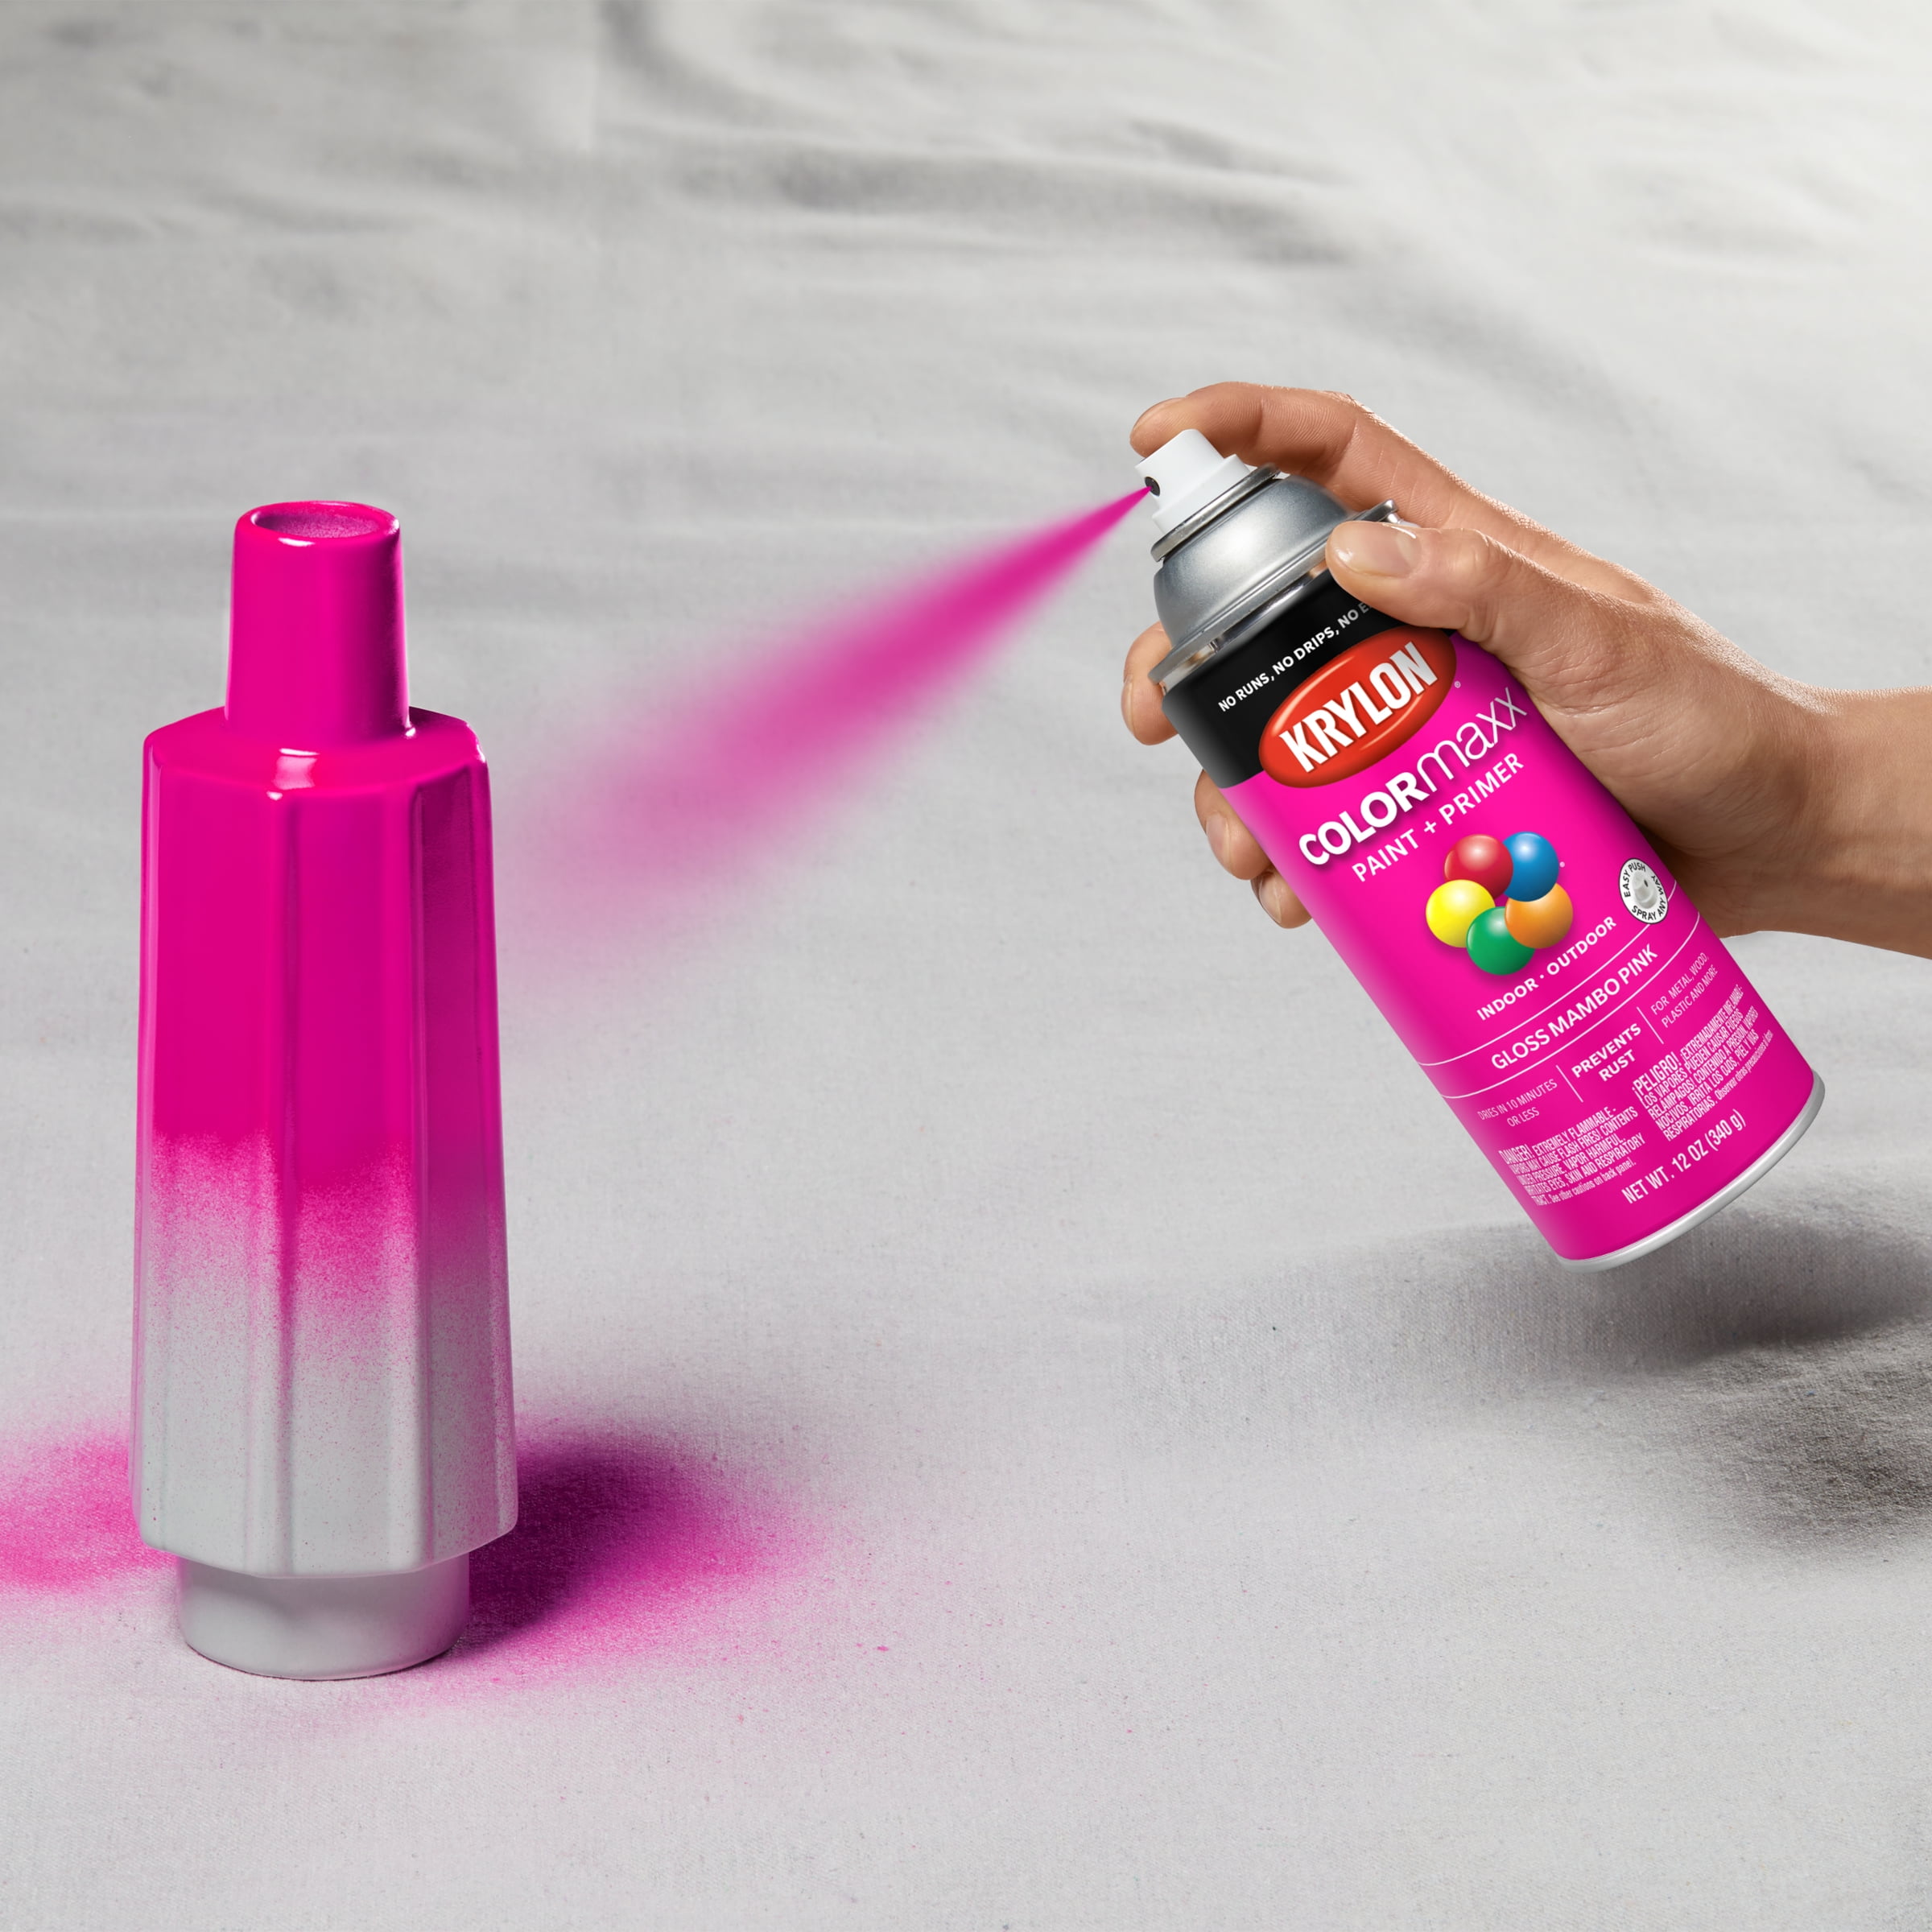 Krylon Mambo Pink COLORmaxx Gloss Paint & Primer - 12 oz